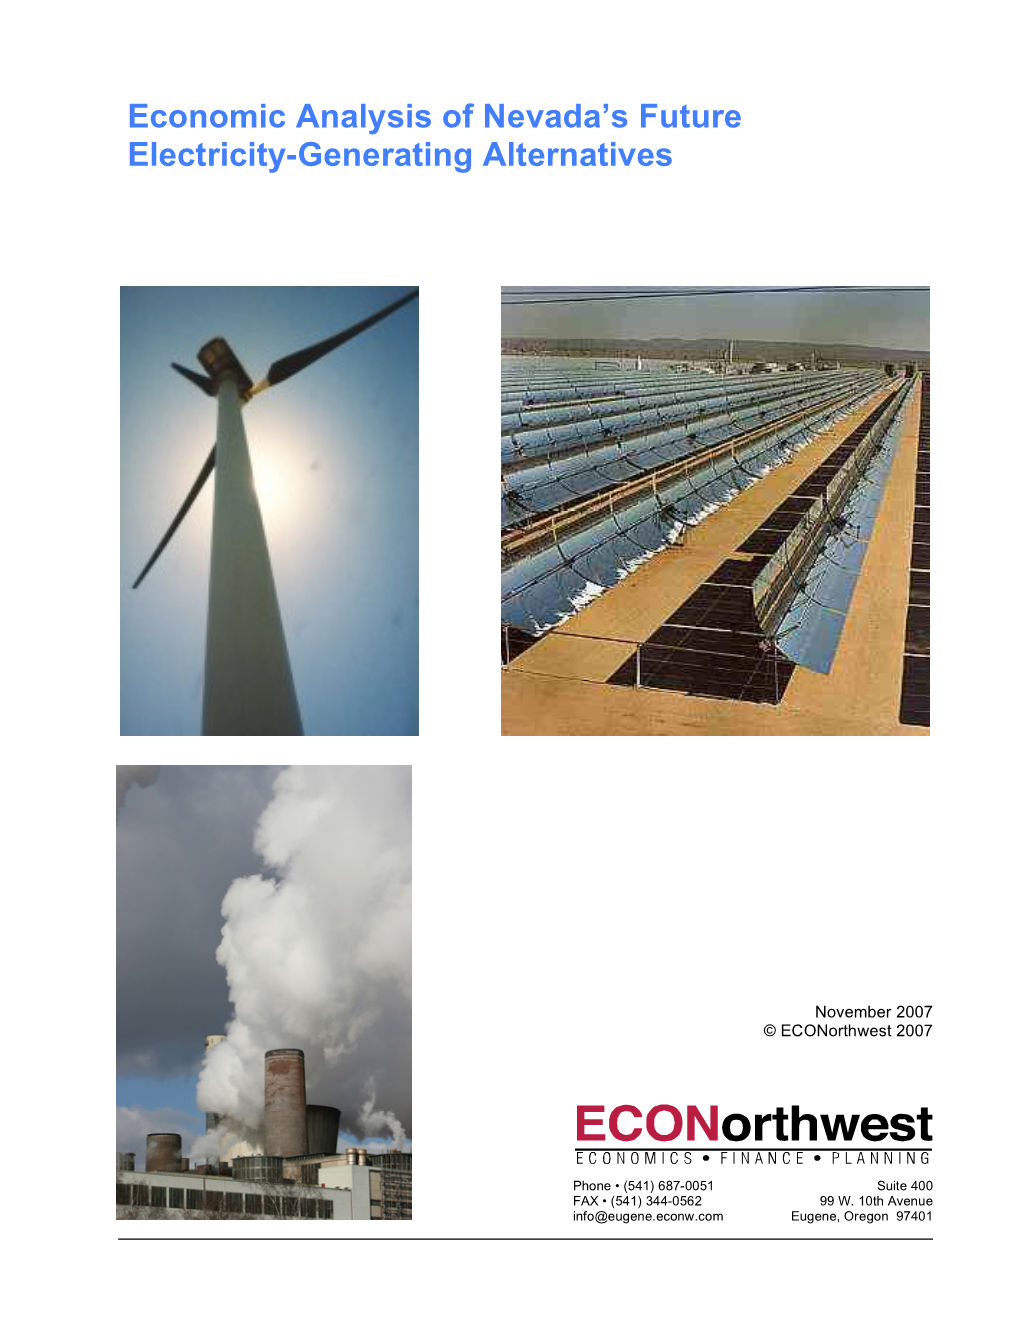 Economic Analysis of Nevada's Future Electricity-Generating Alternatives